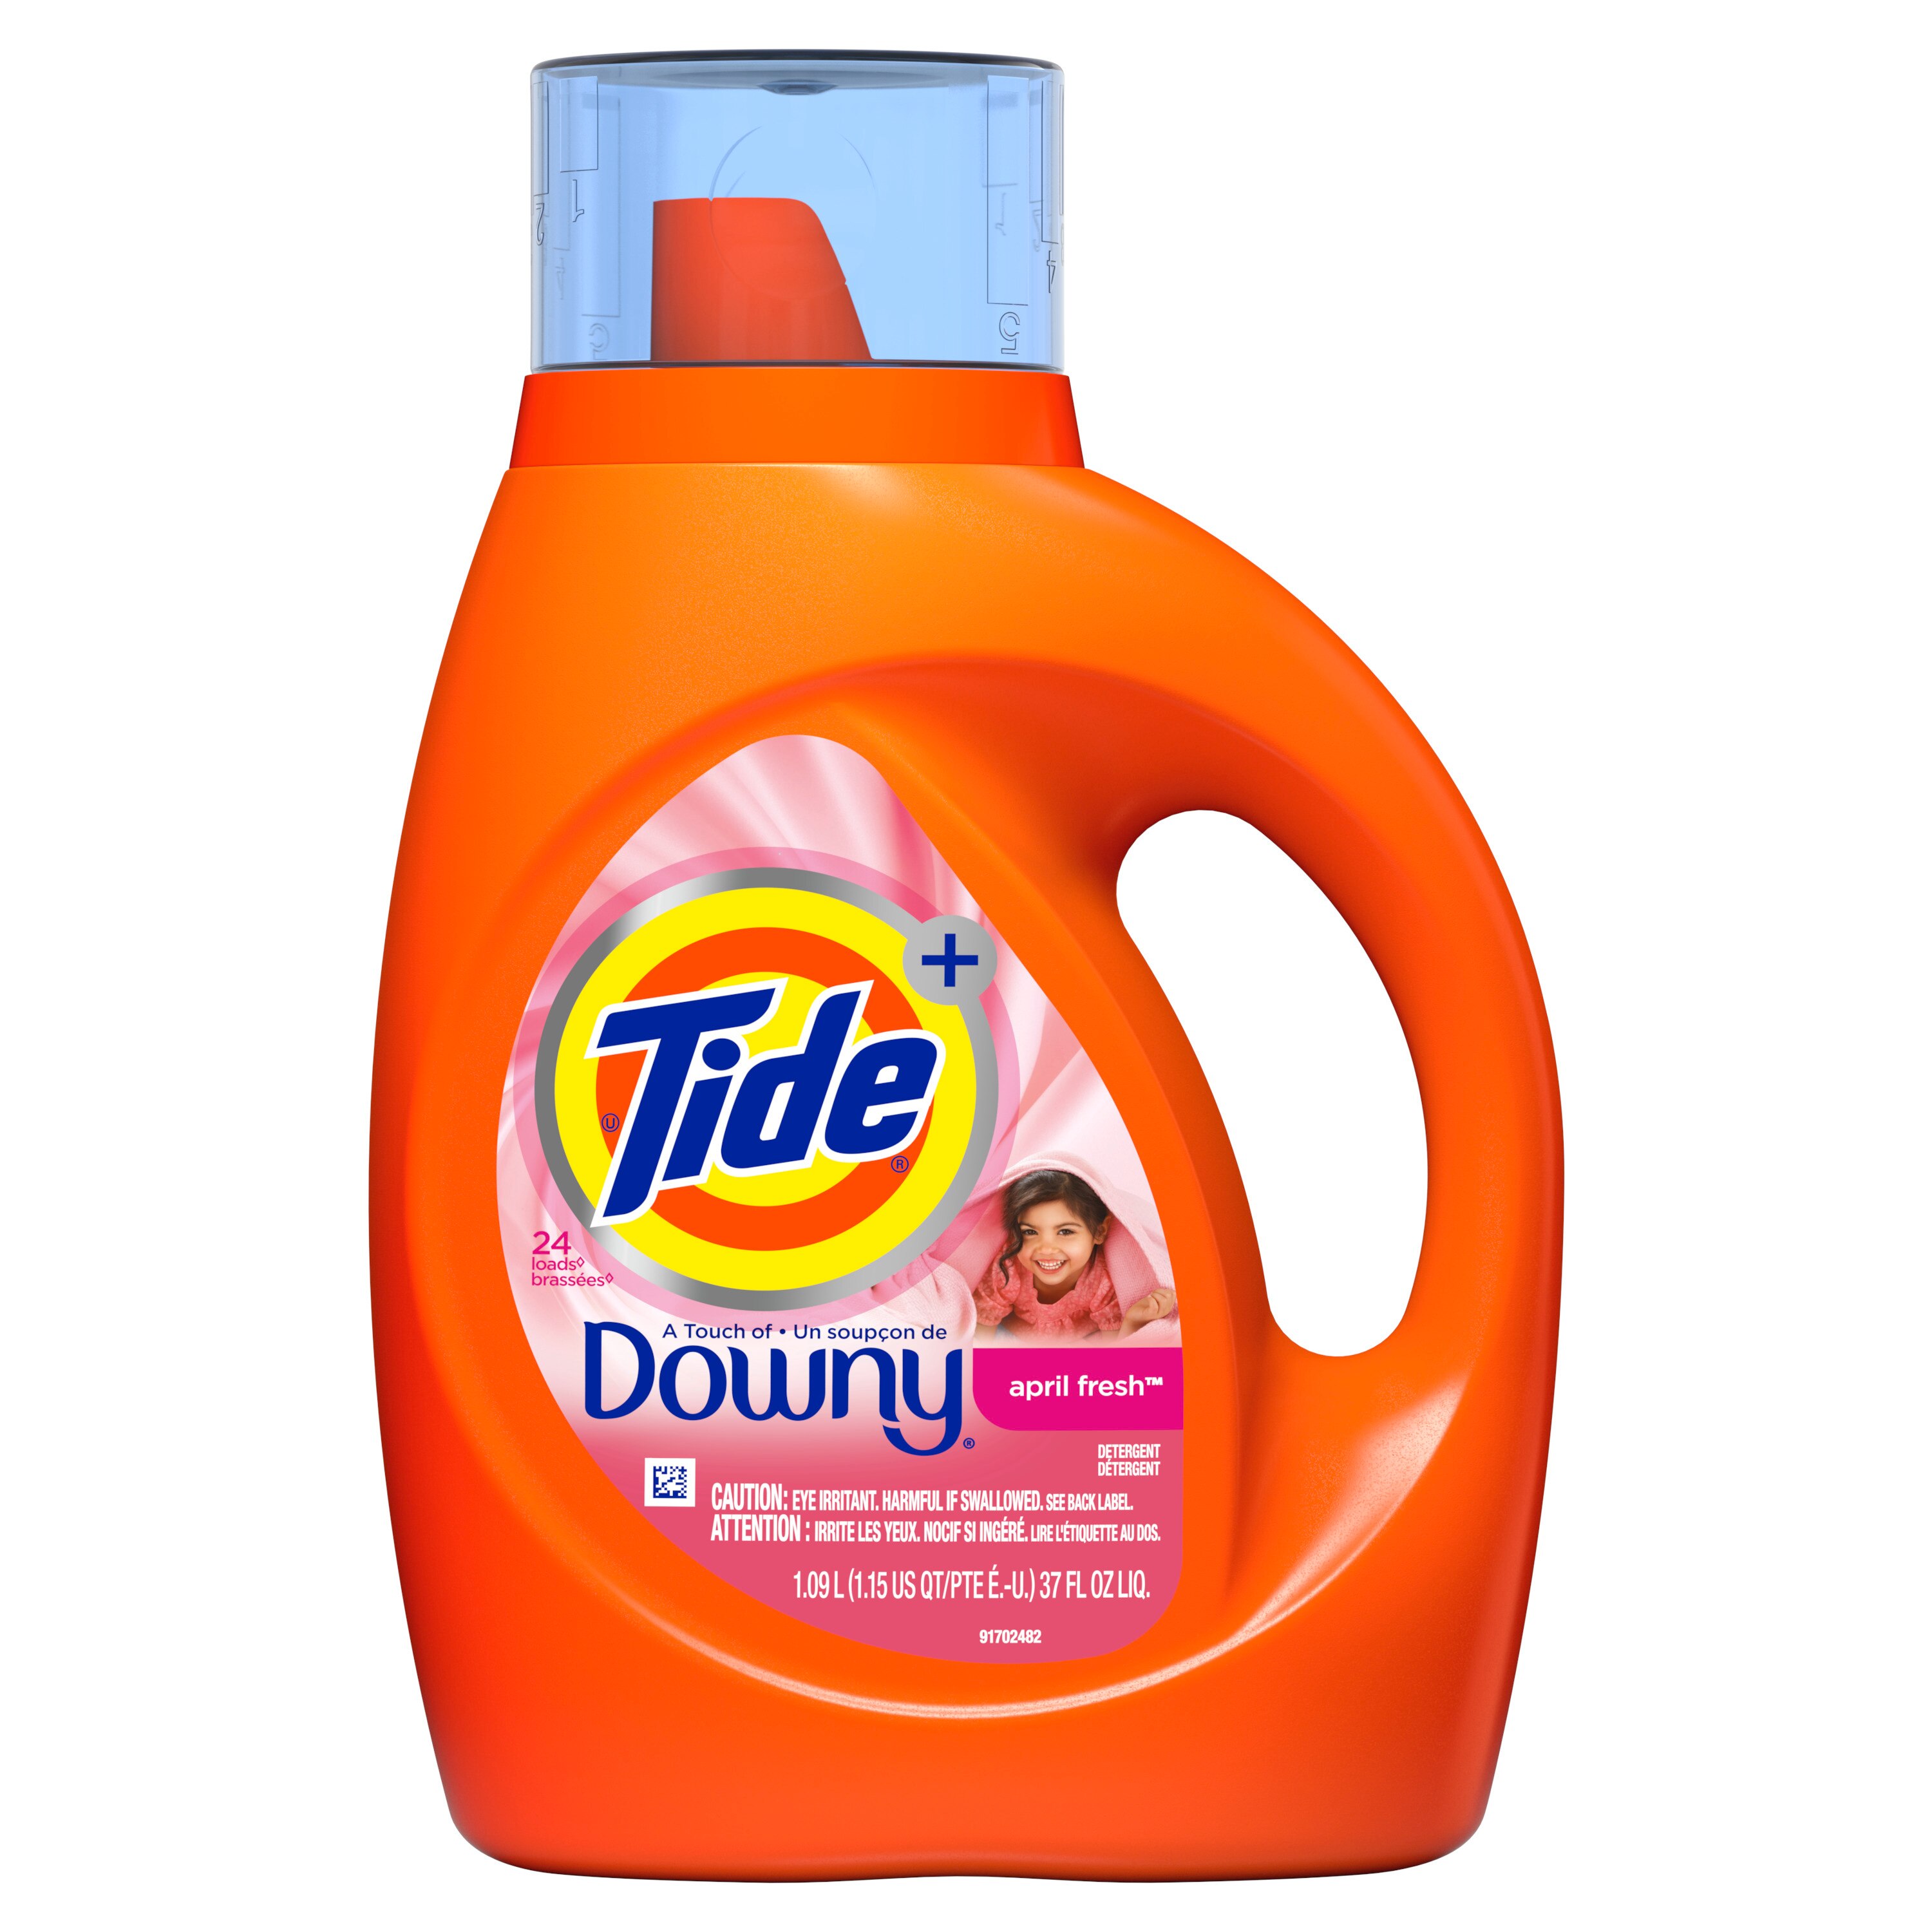 Tide Plus Downy - Jabón líquido para la ropa, fragancia April Fresh, 37 oz